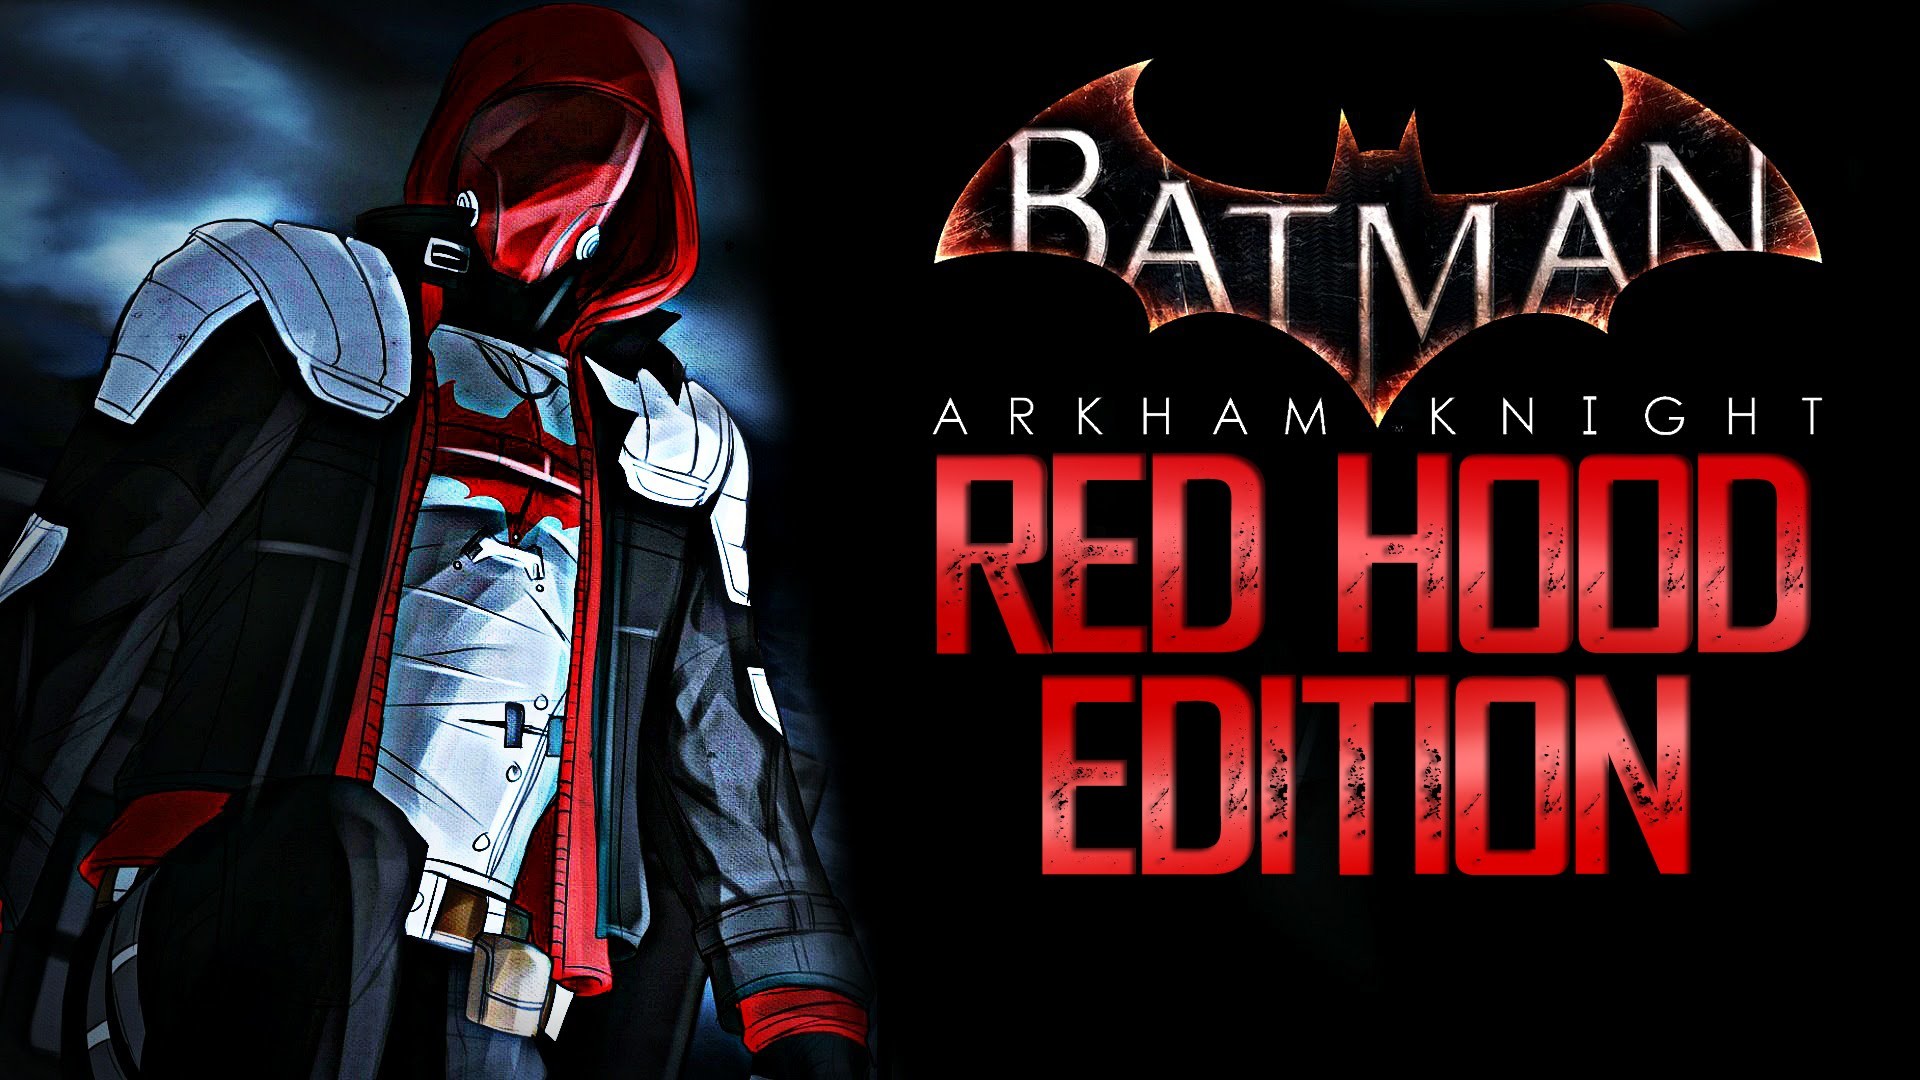 1920x1080 Batman Arkham Origins Red hood becoming joker - YouTube